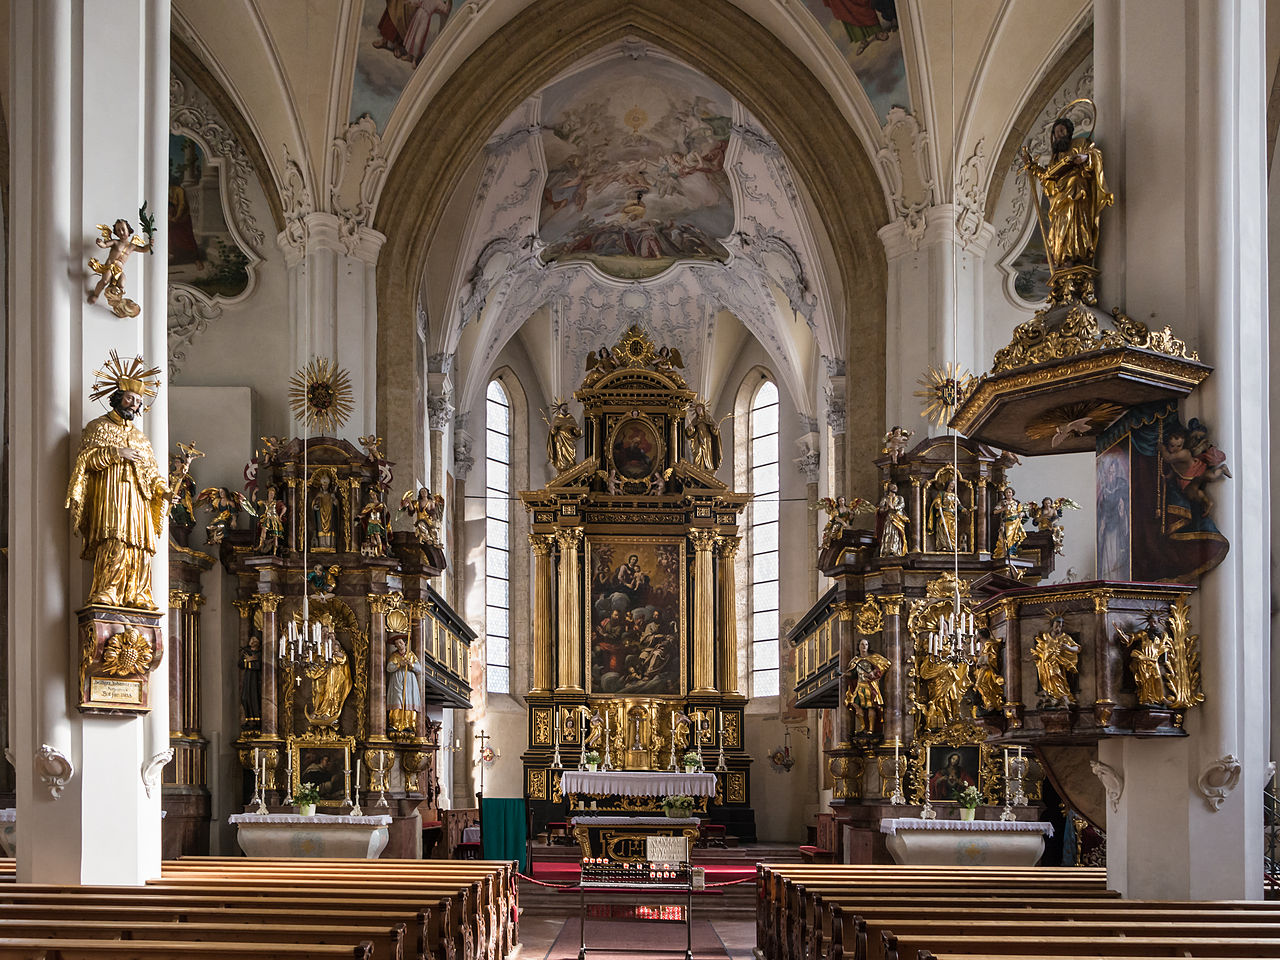 Interior of the parish church. Photo: Wikimedia/Uaoei1